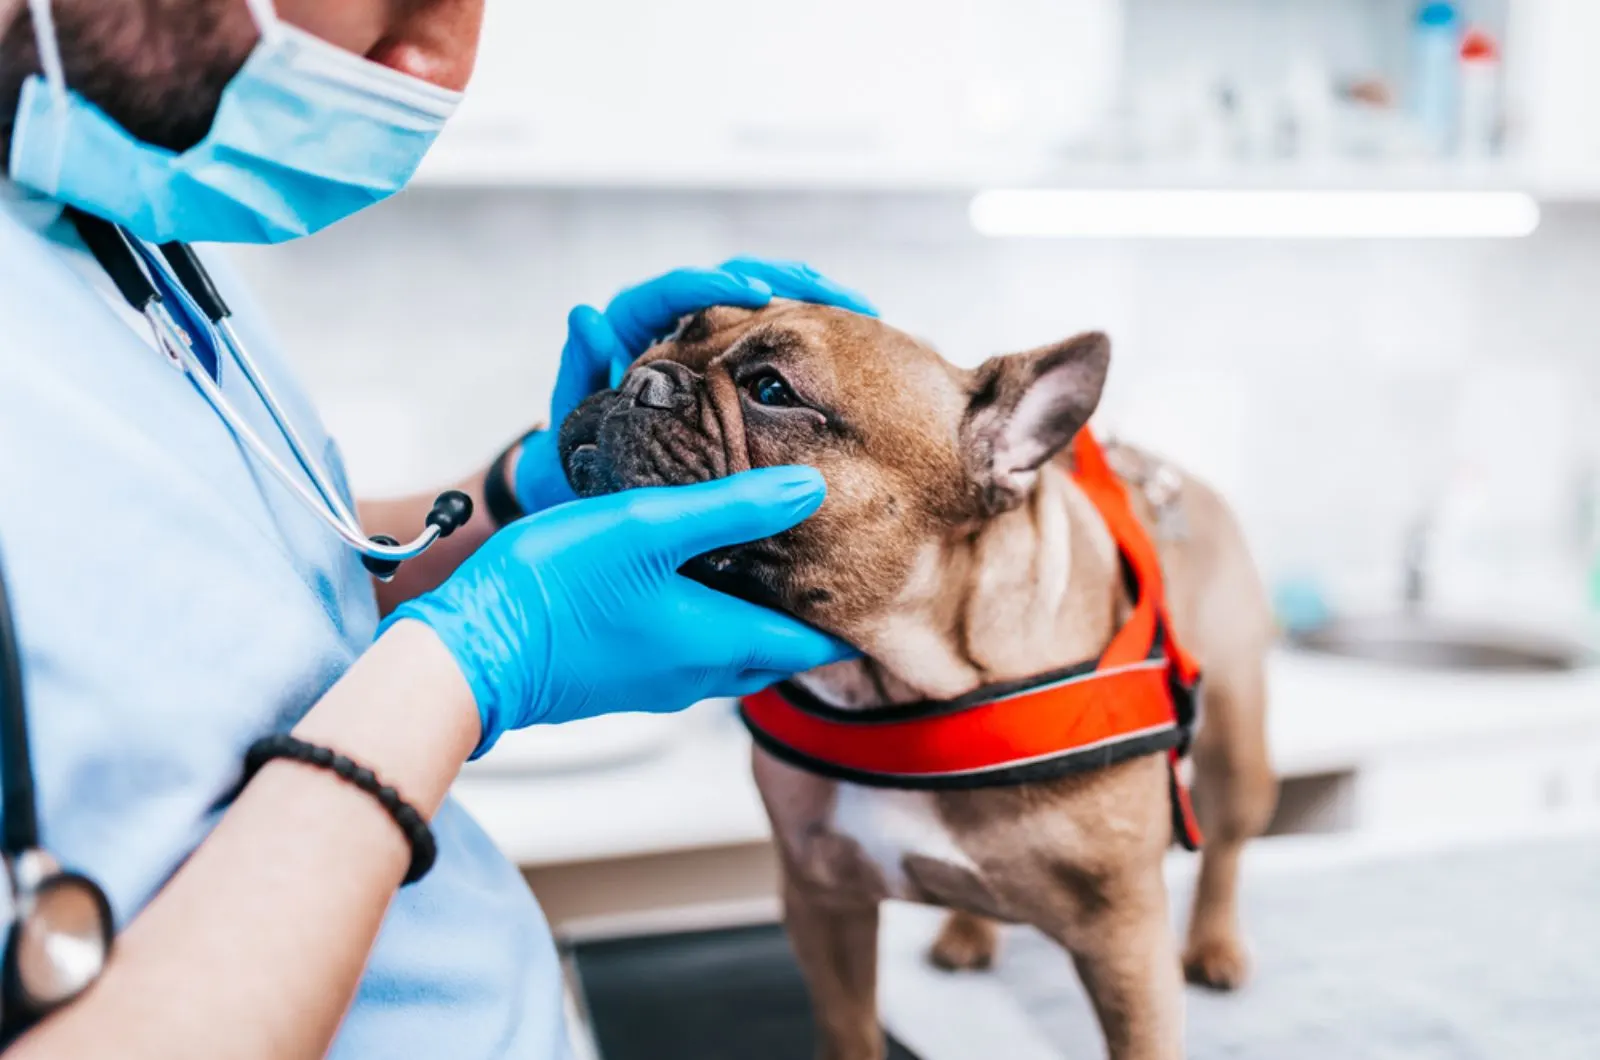 french bulldog at vet ambulance being examined by a veterinarian